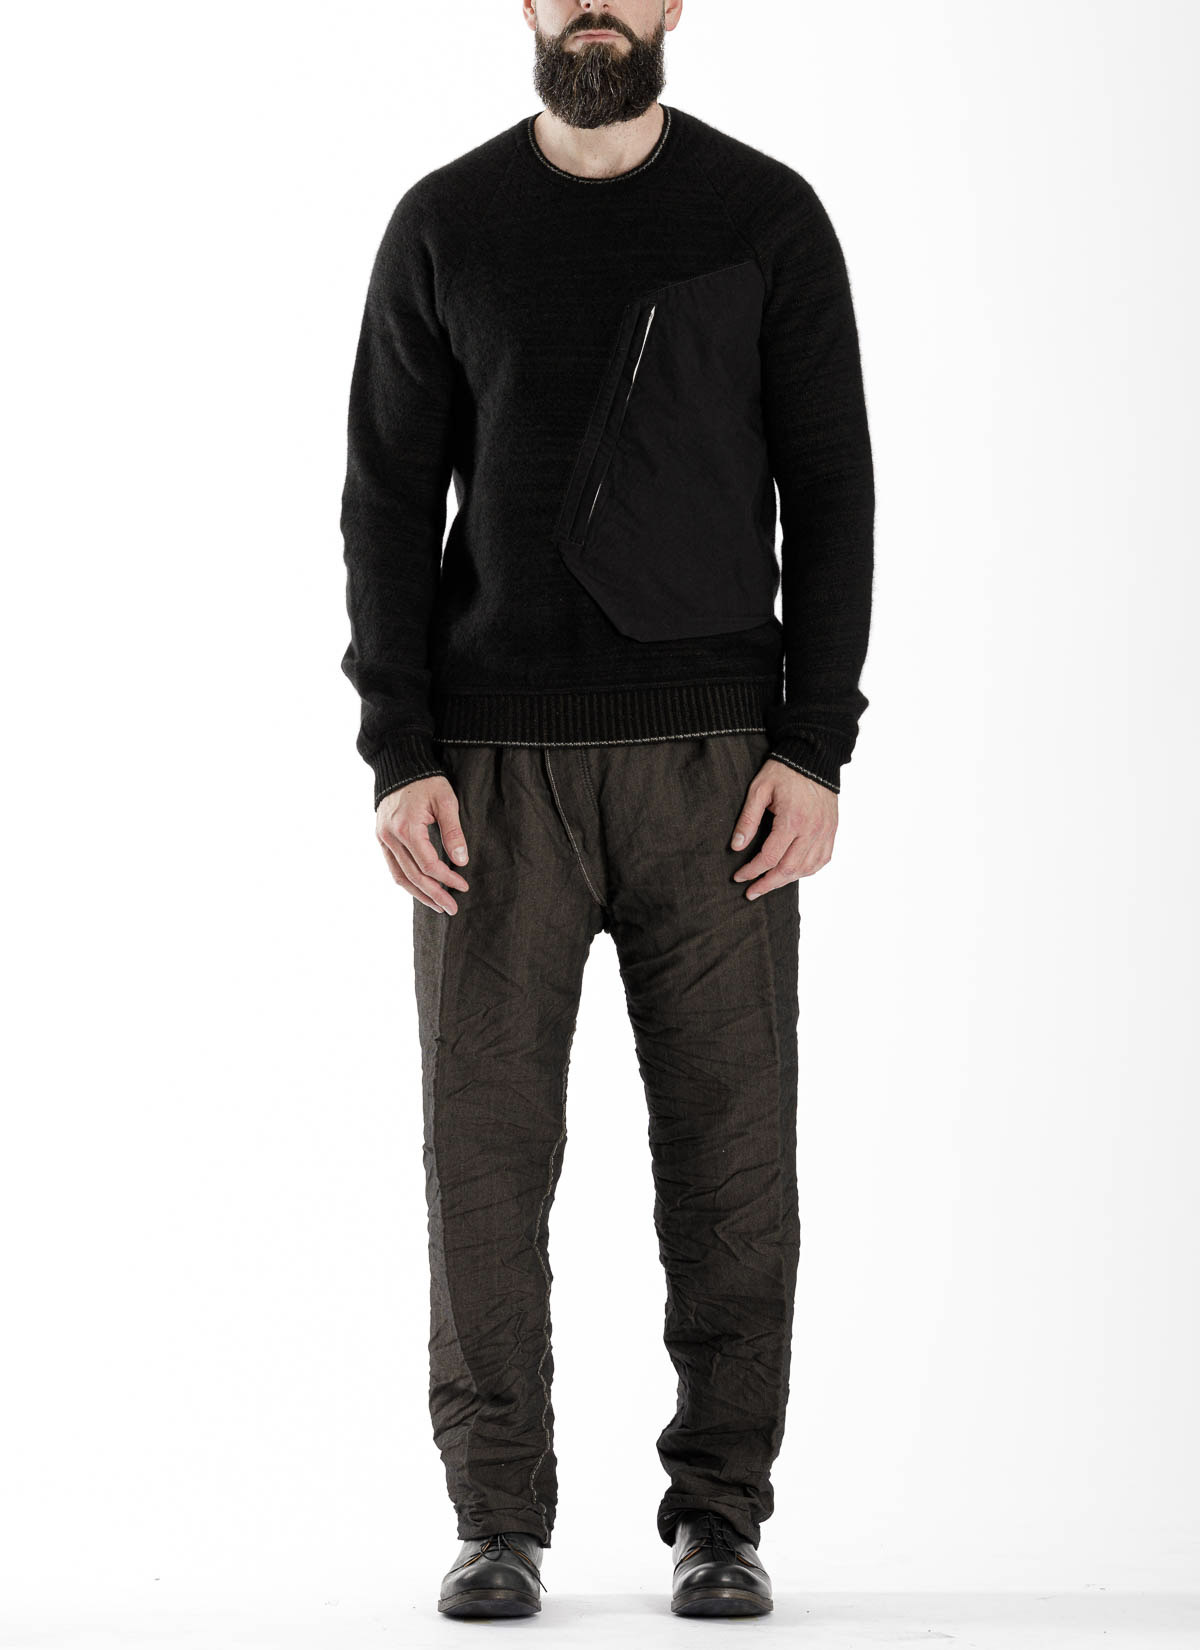 hide-m | TAICHI MURAKAMI Pocket Sweater, black cashmere